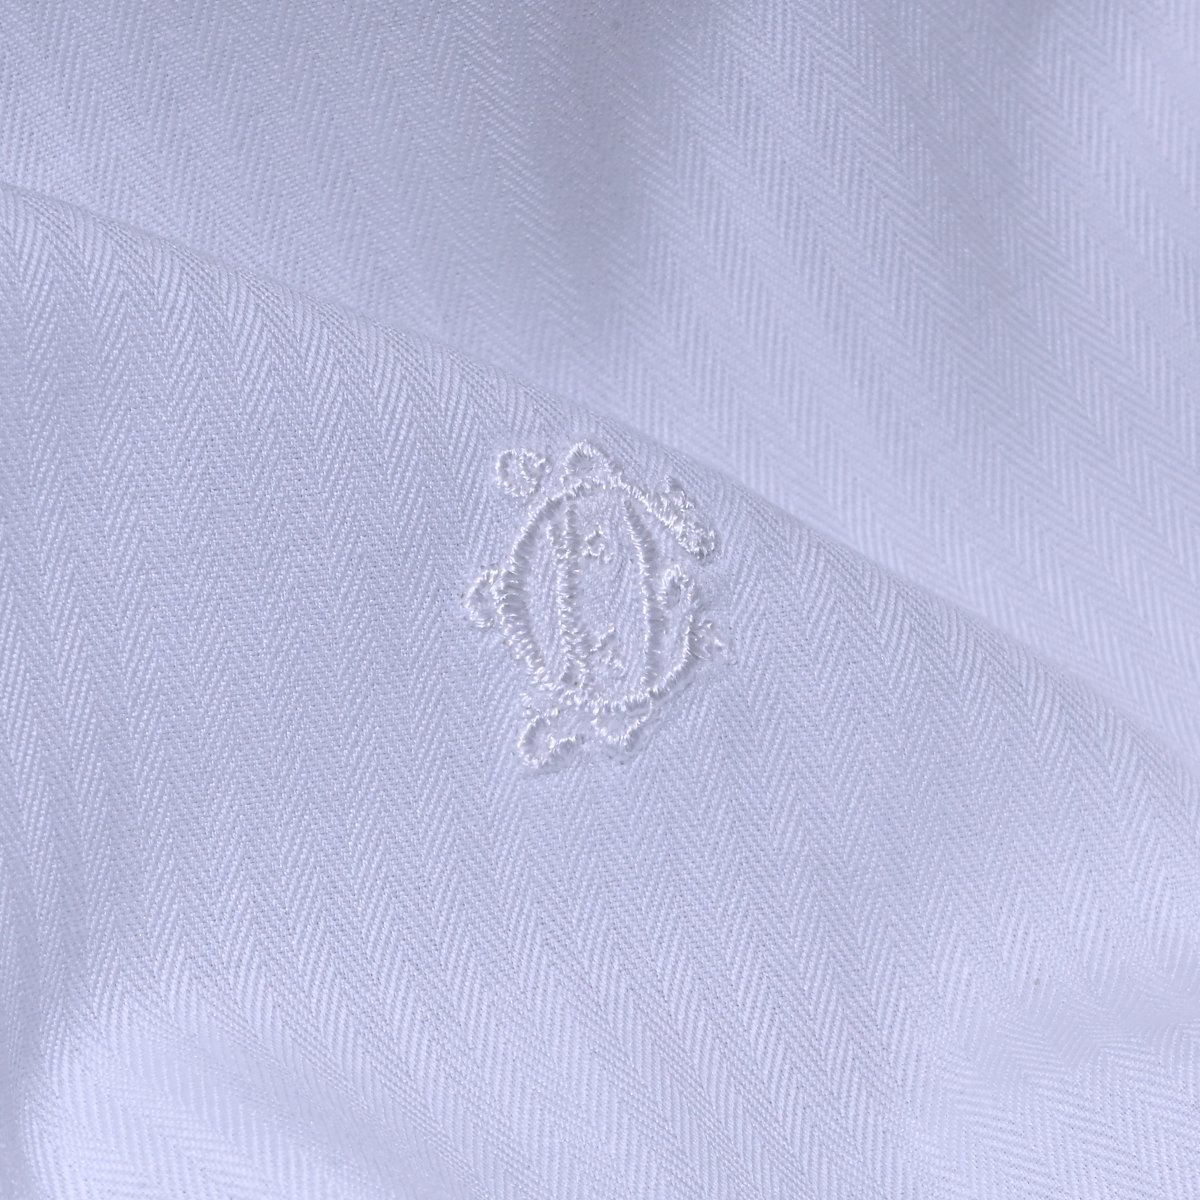  genuine article super-beauty goods Dior Homme complete sale k rest Logo embroidery herringbone stripe dress shirt men's 40 white long sleeve tops domestic regular goods 